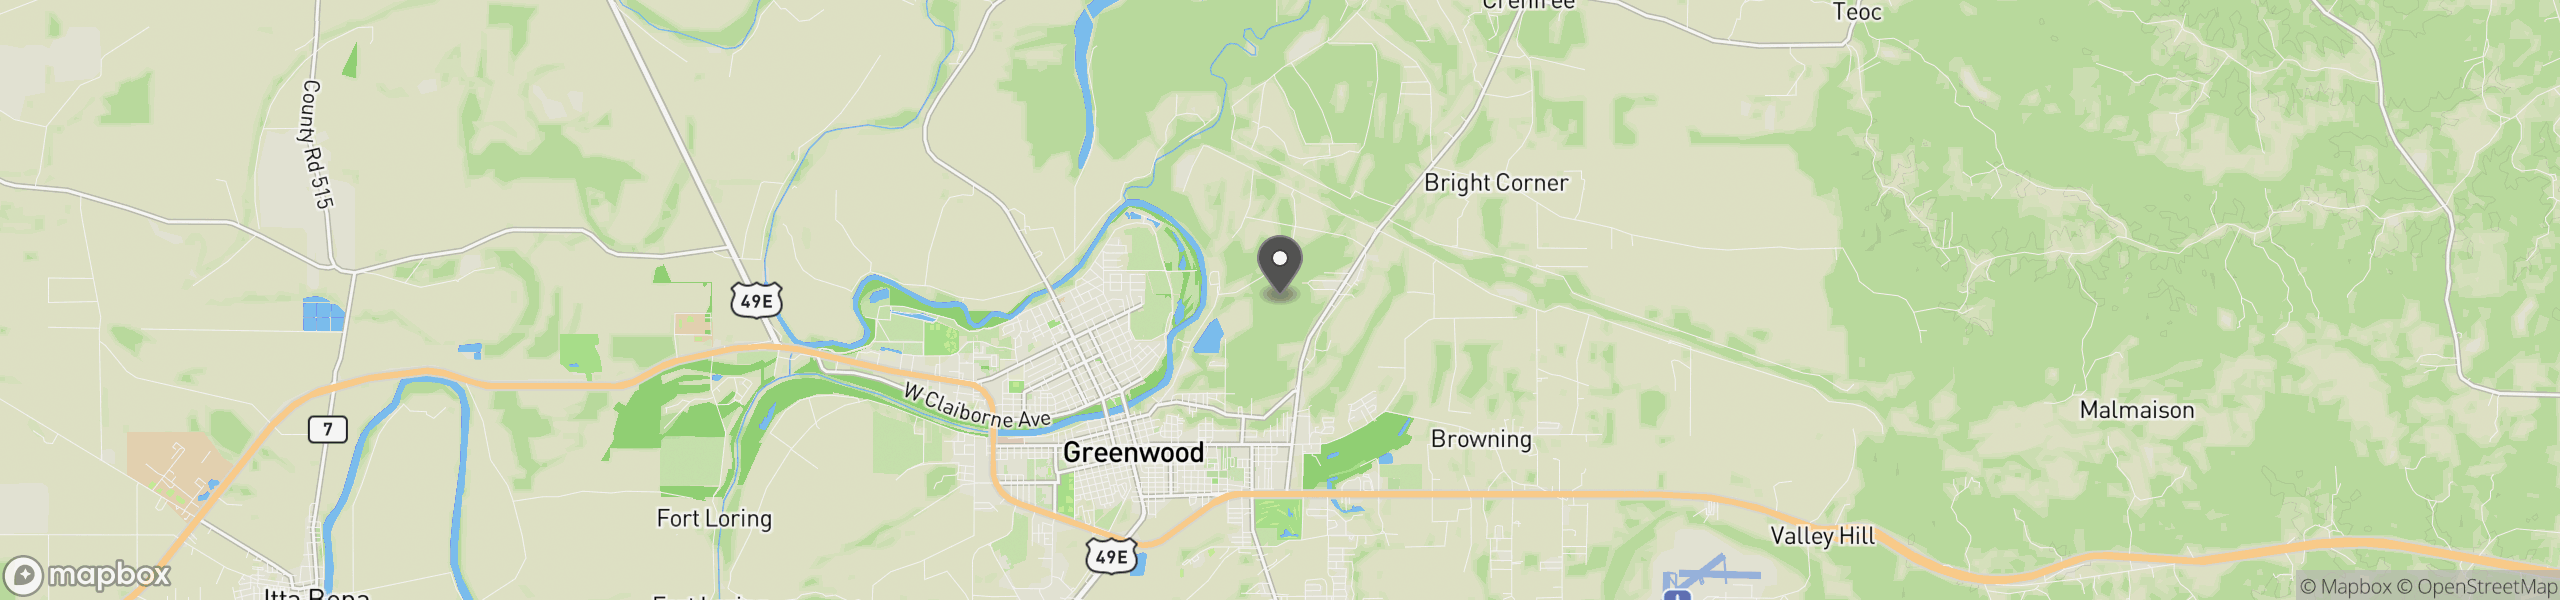 Greenwood, MS 38930